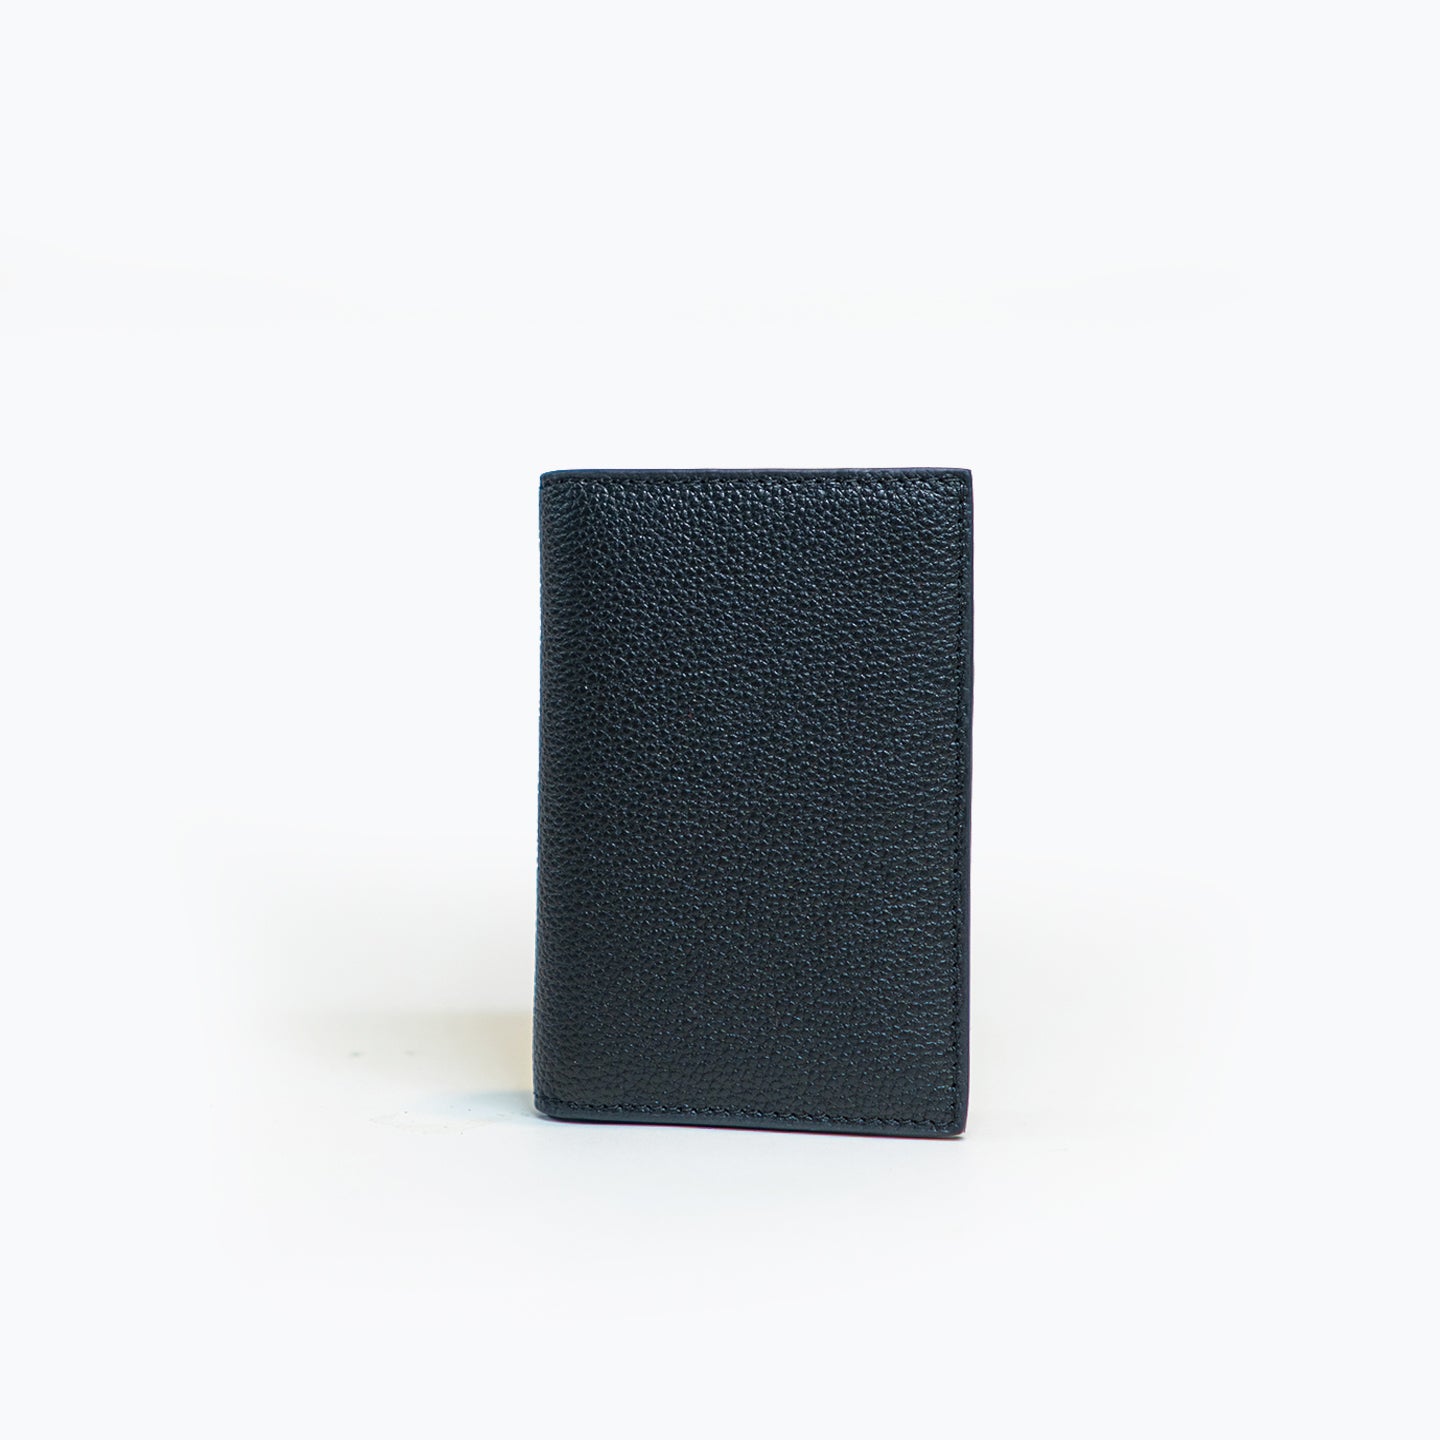 Lumi Pocket Organizer - Pitch Black